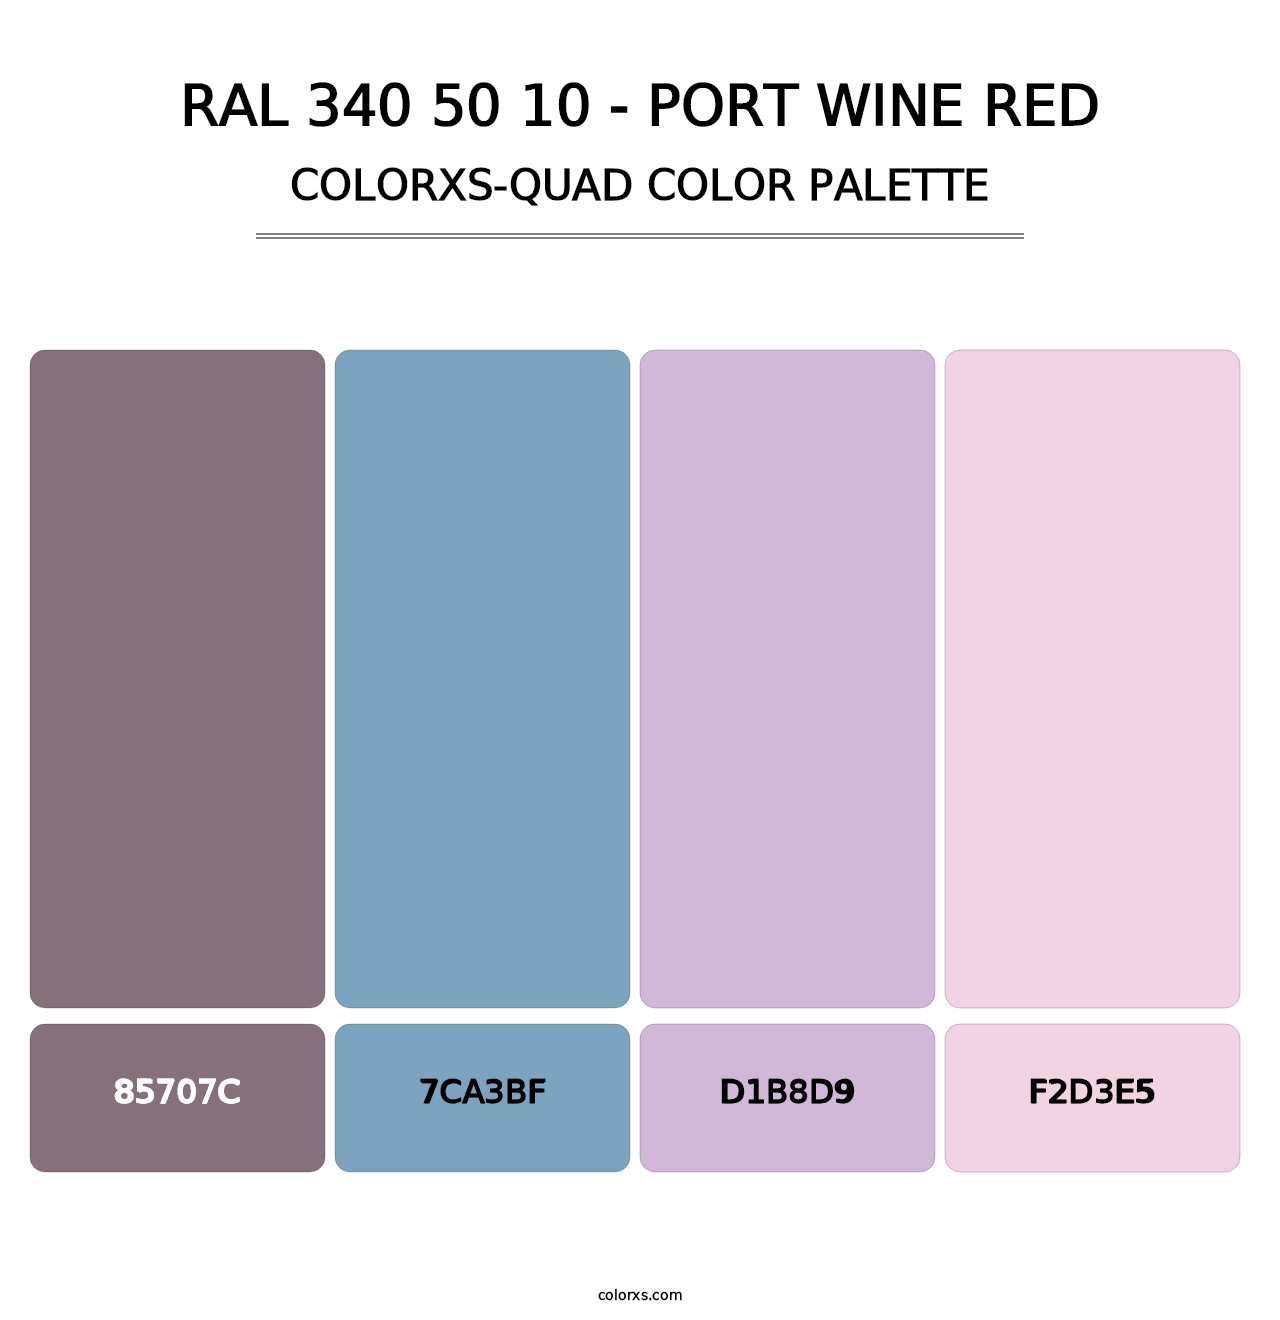 RAL 340 50 10 - Port Wine Red - Colorxs Quad Palette